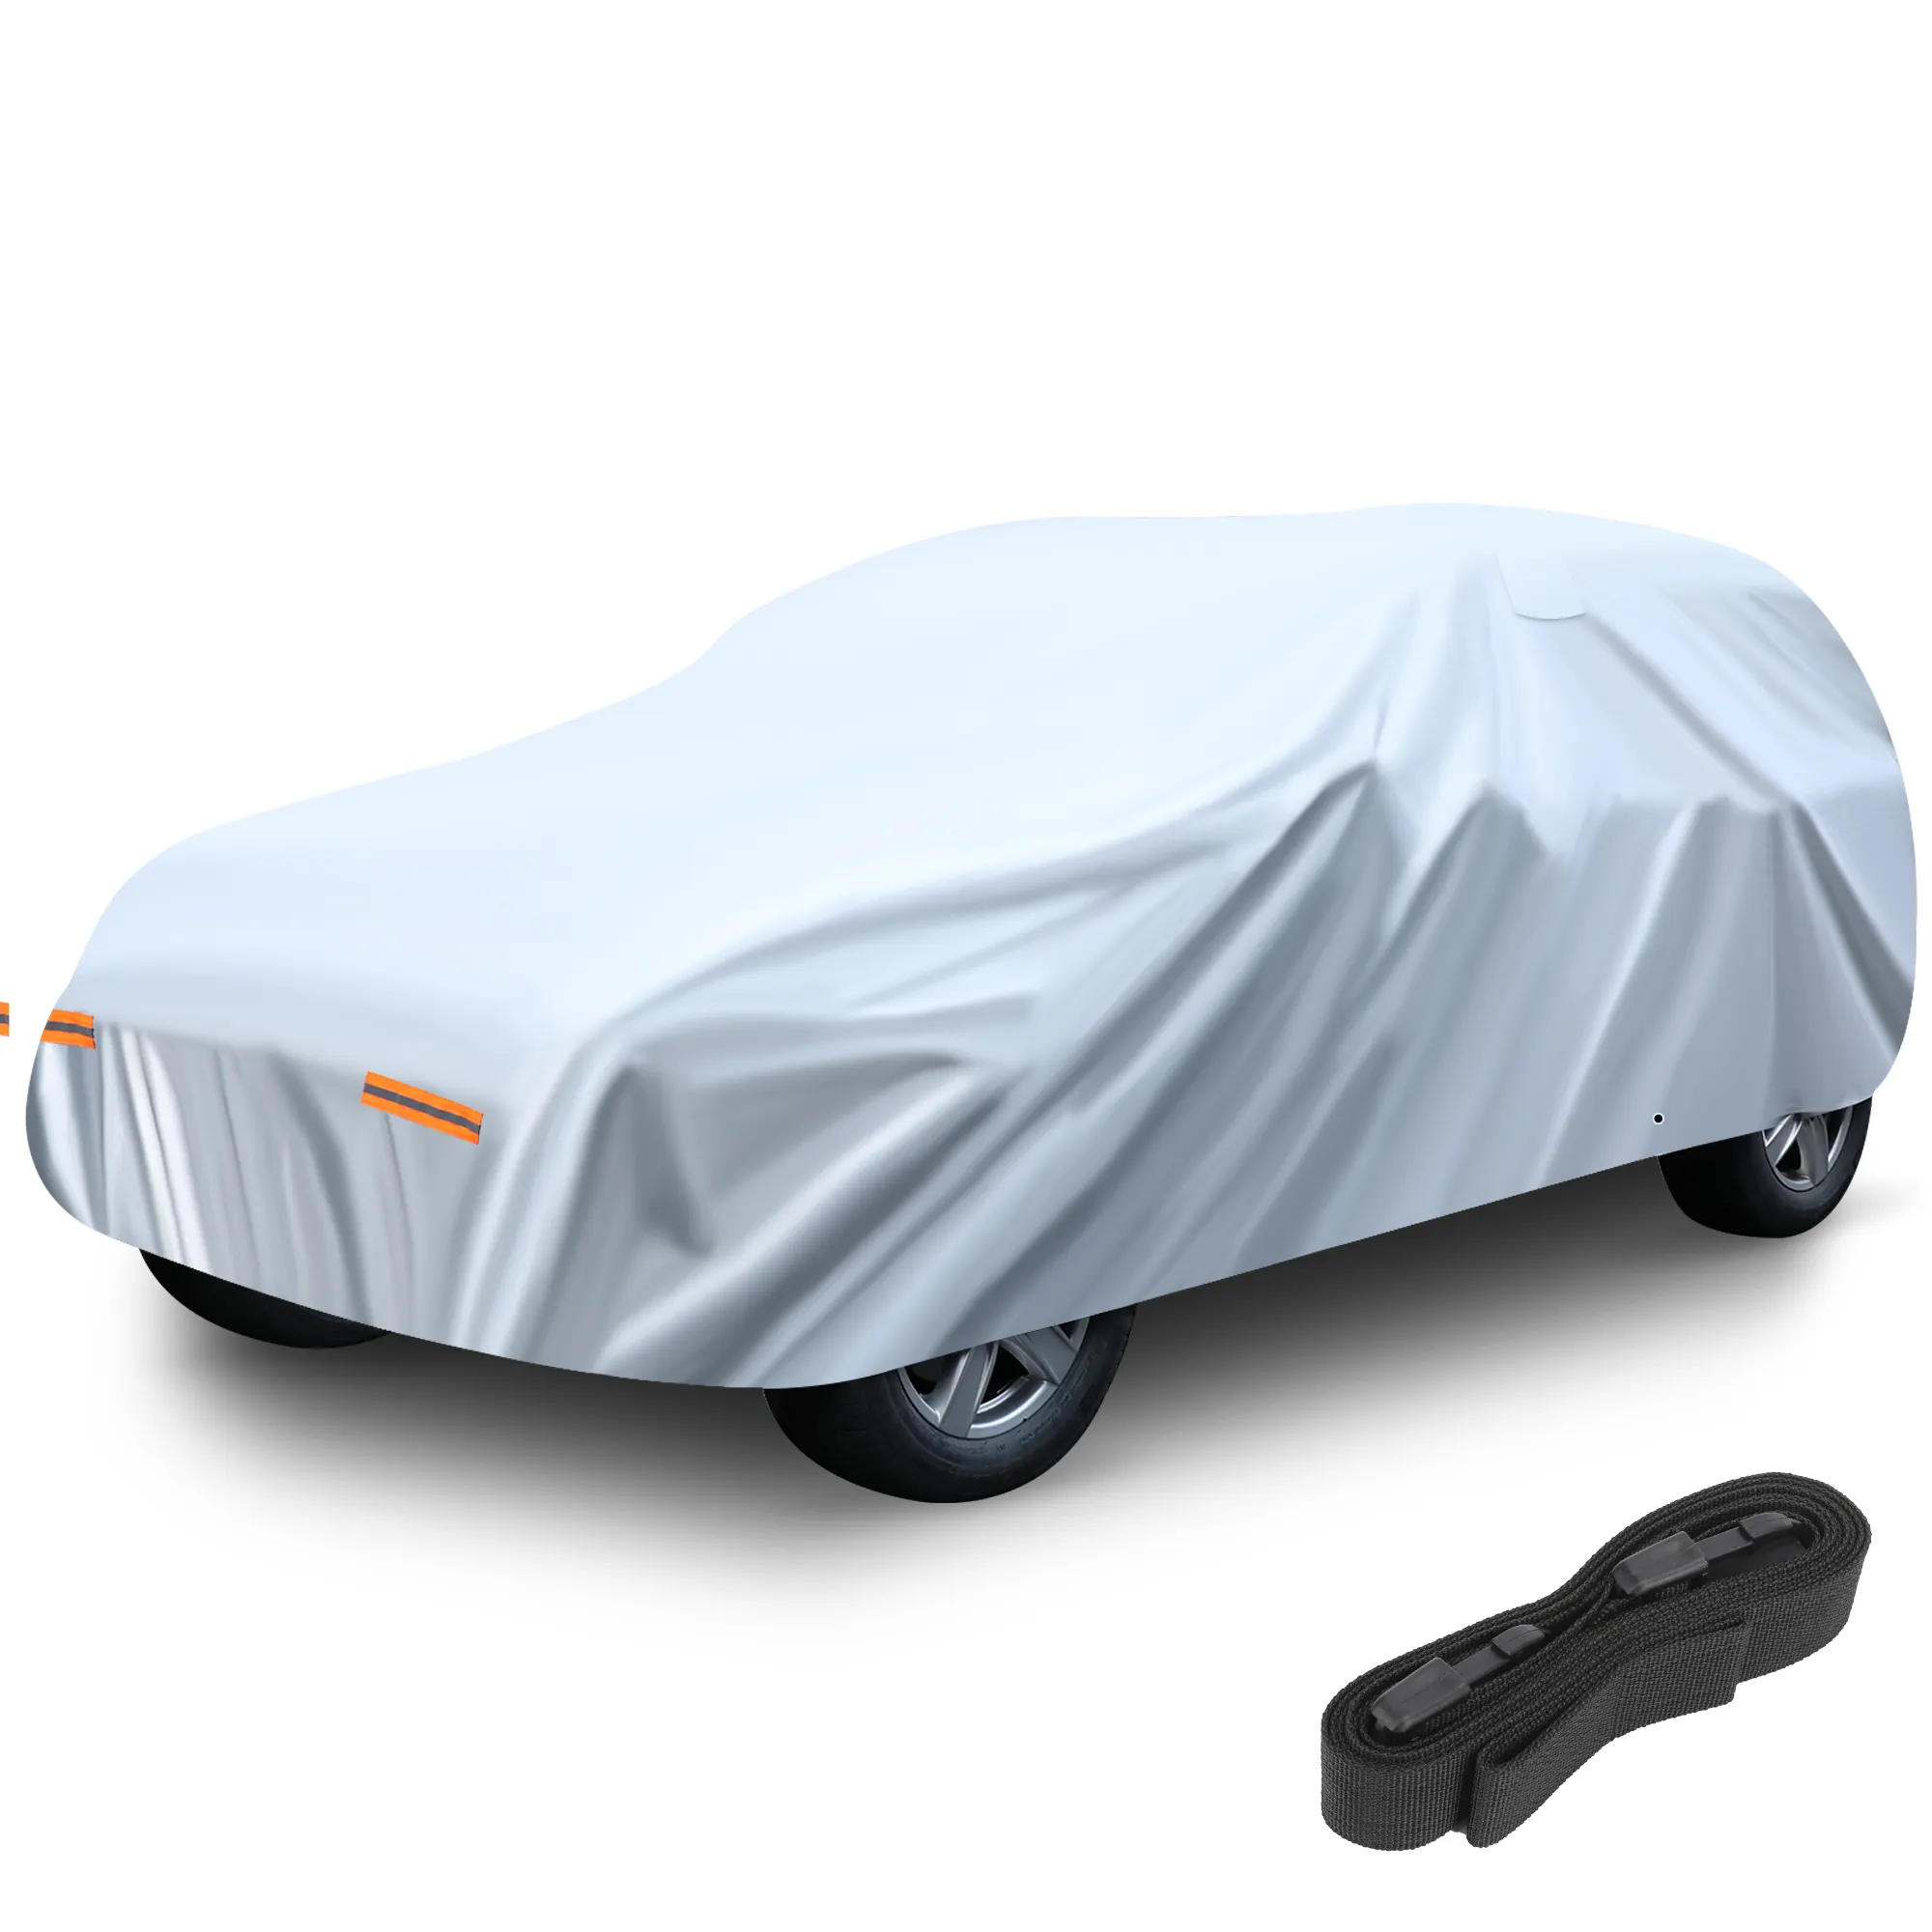 Universcar कवर निविड़ अंधकार सनस्क्रीन सभी मौसम आउटडोर PEVA प्लास्टिक foldable कार कवर तम्बू कार कवर आश्रय